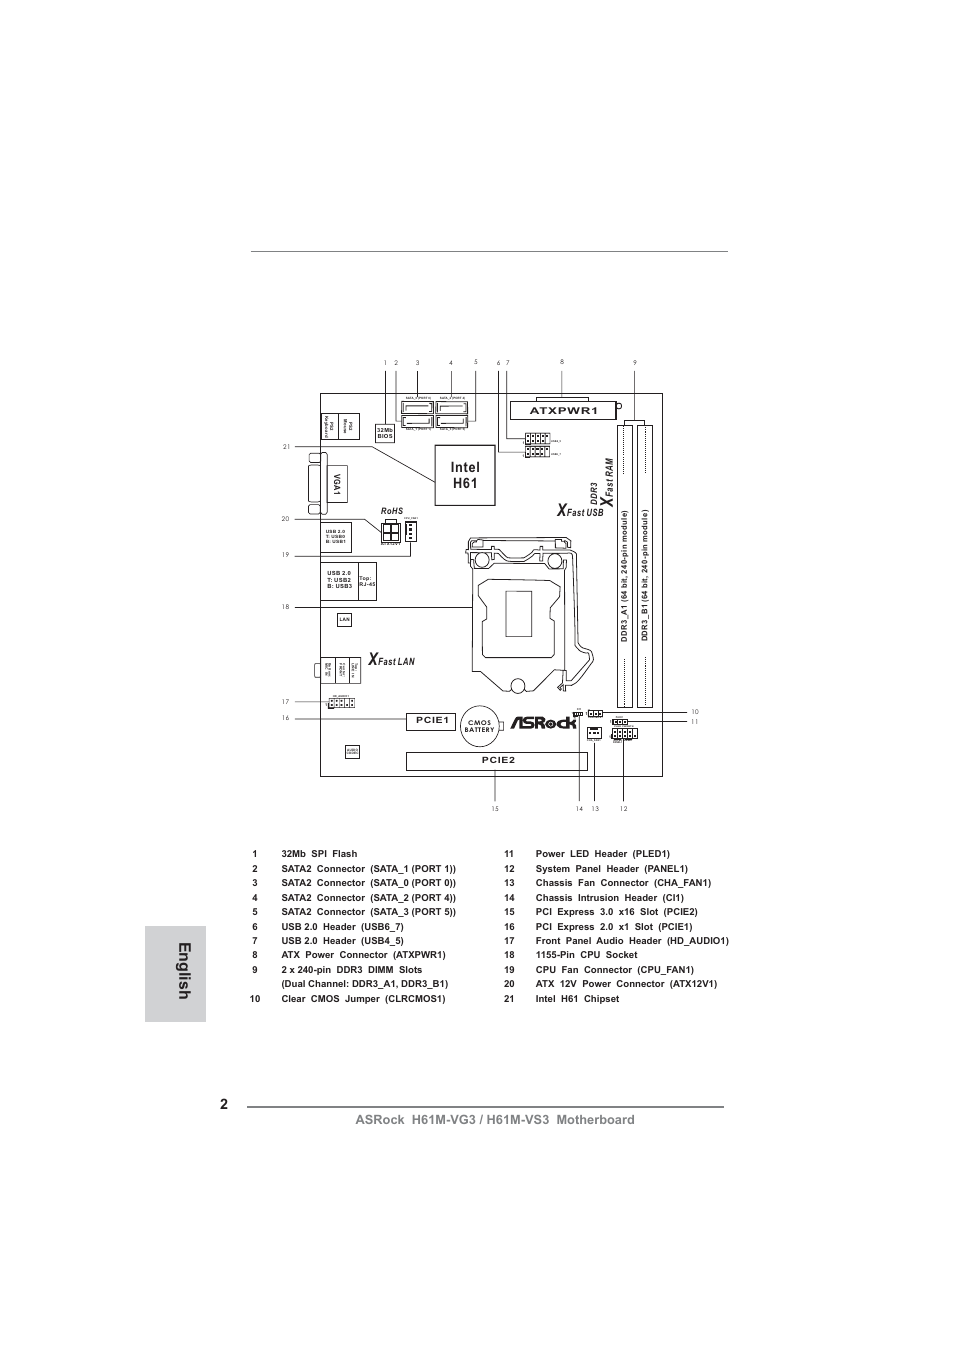 Motherboard layout, English, Intel h61 | ASRock H61M-VG3 User Manual | Page  2 / 48